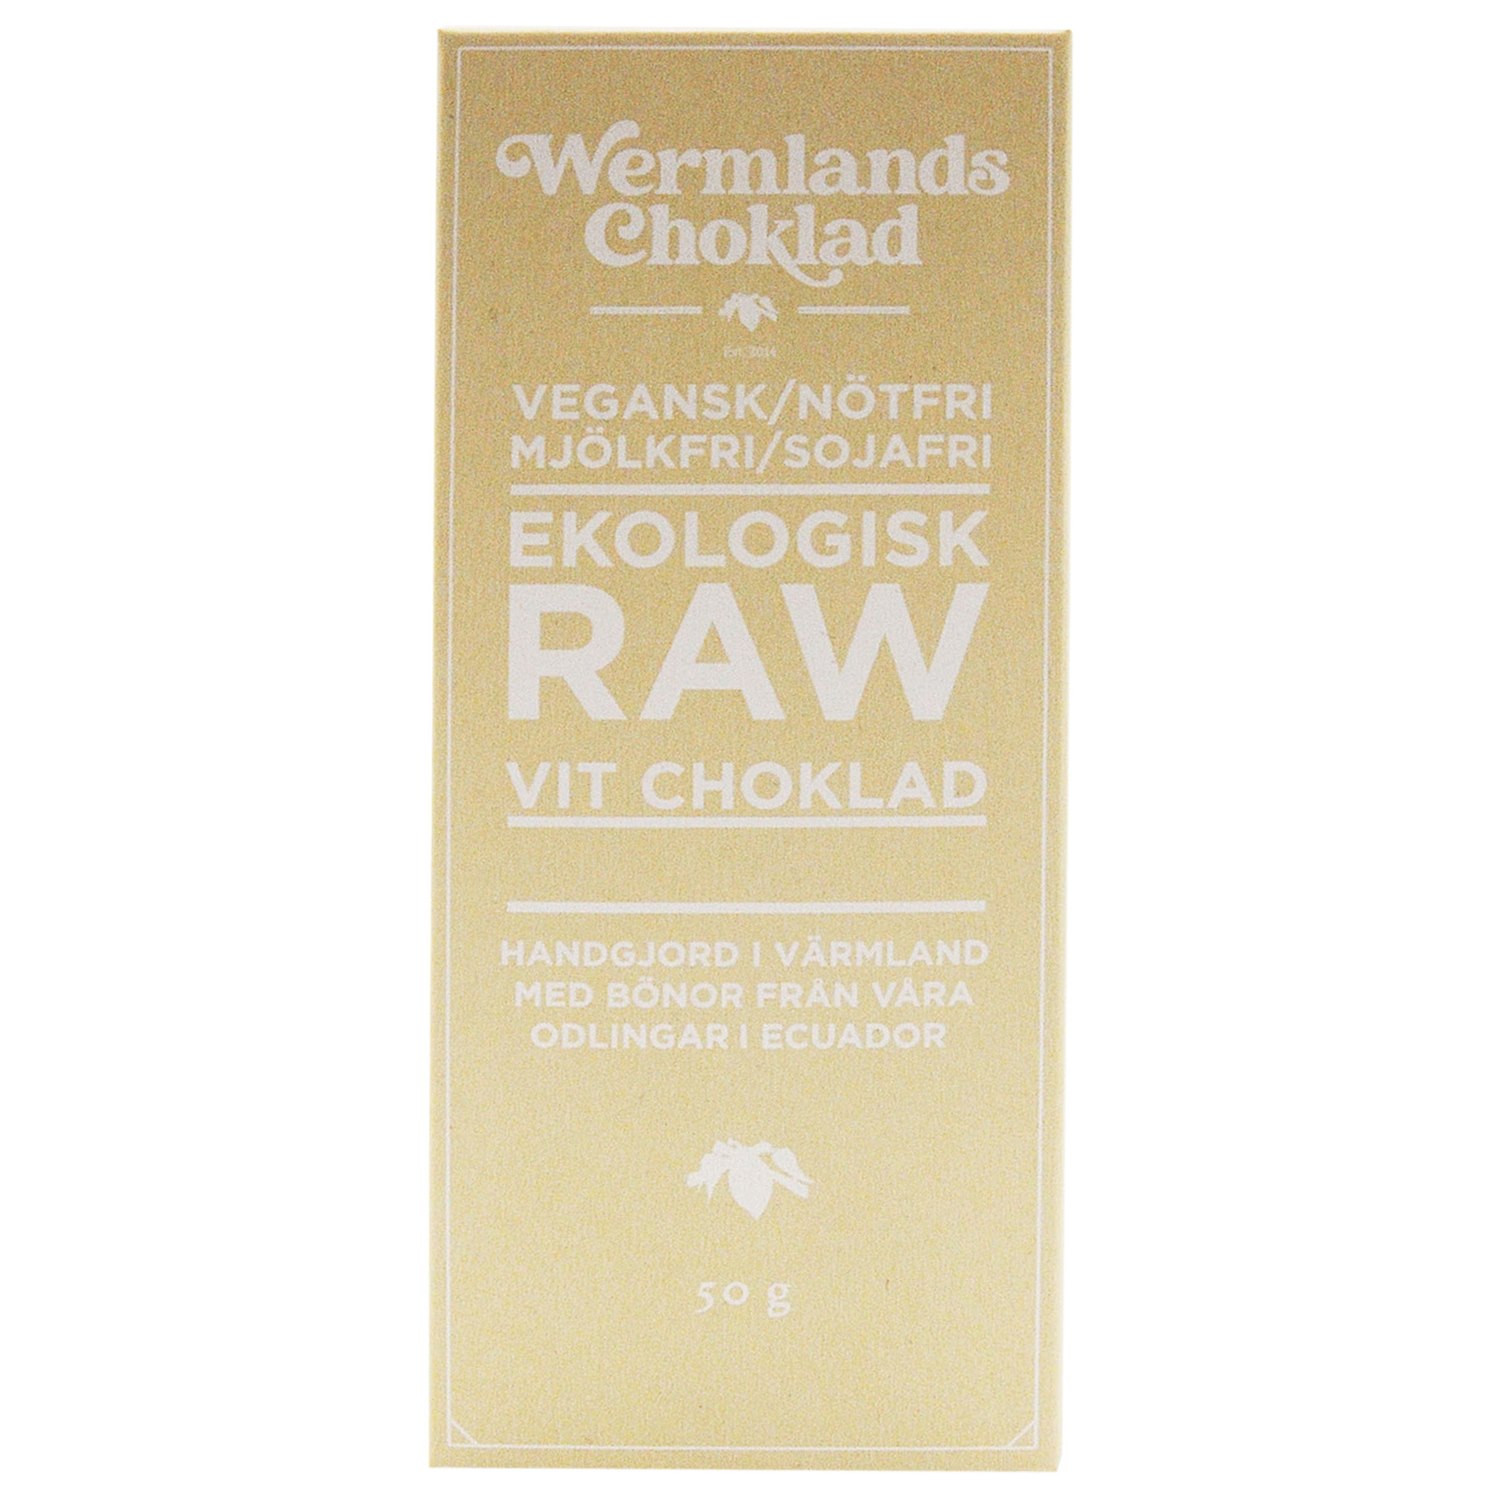 WermlandsChoklad Ekologisk Rawchoklad Vit, 50 g